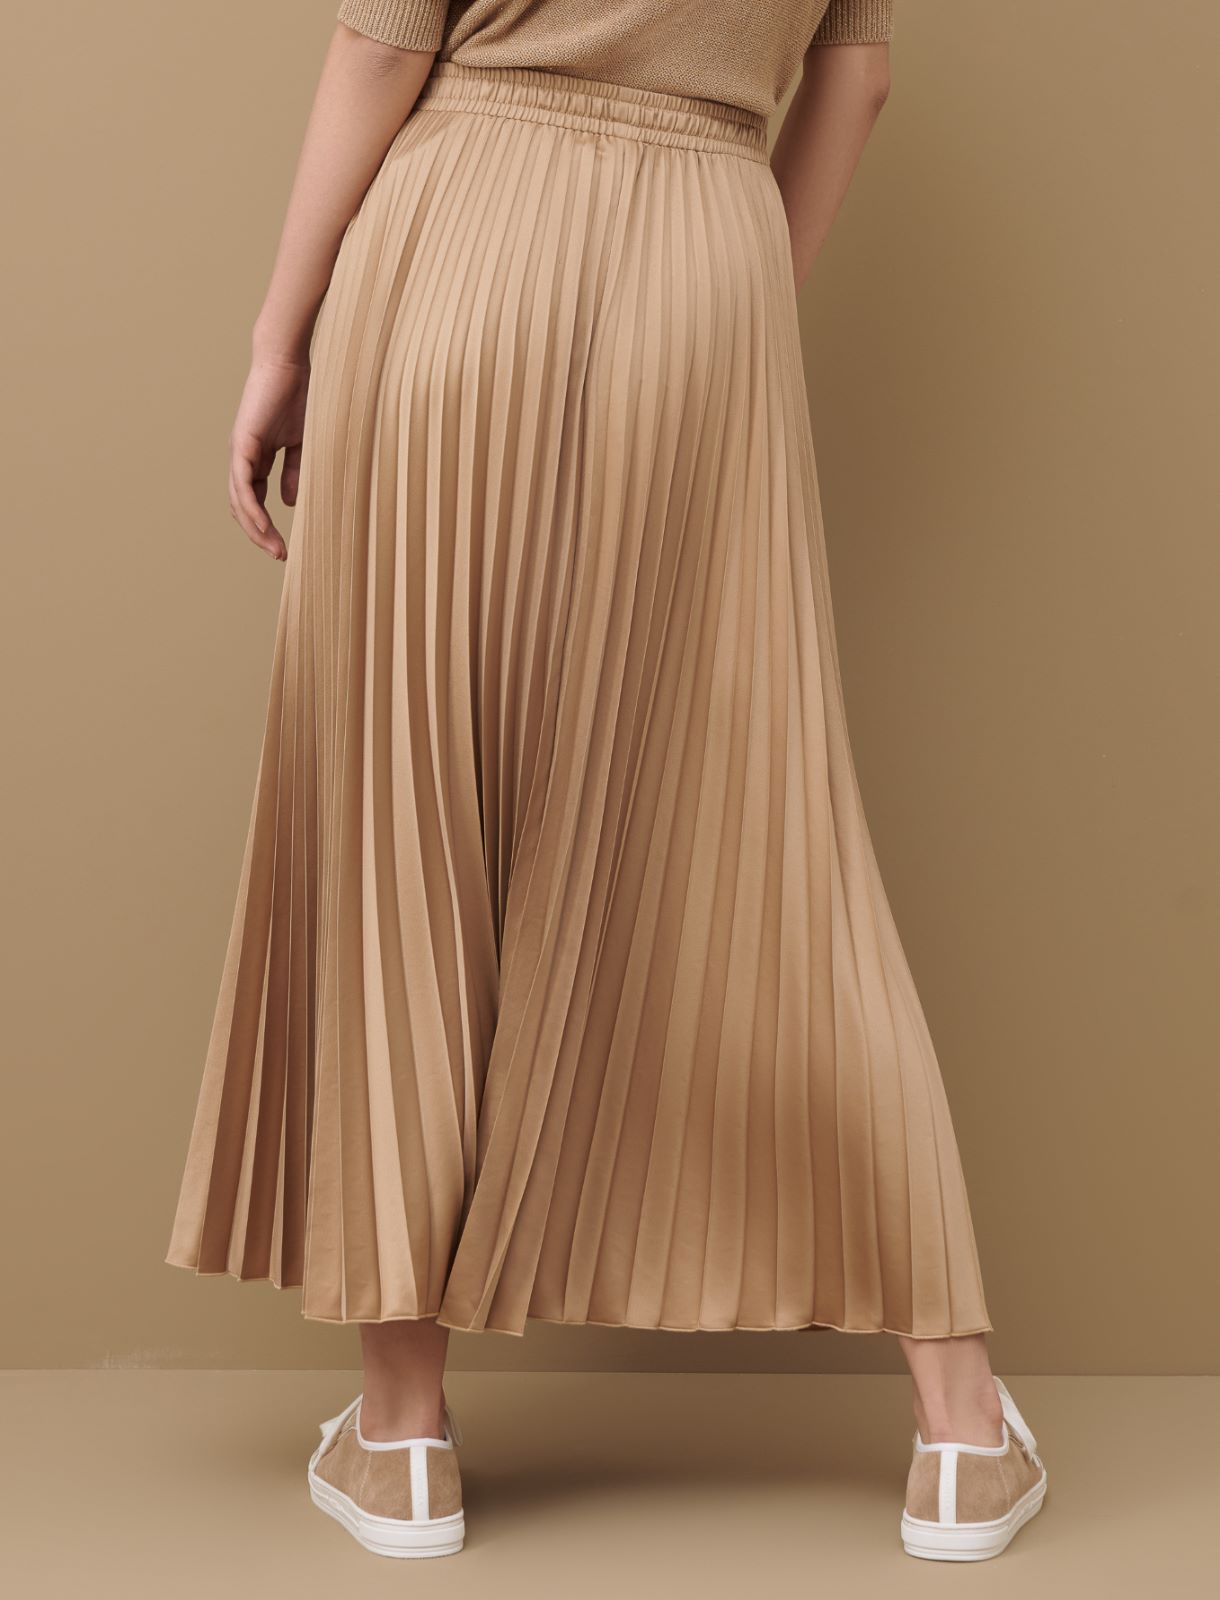 Pleated skirt - Sand - Marina Rinaldi - 2